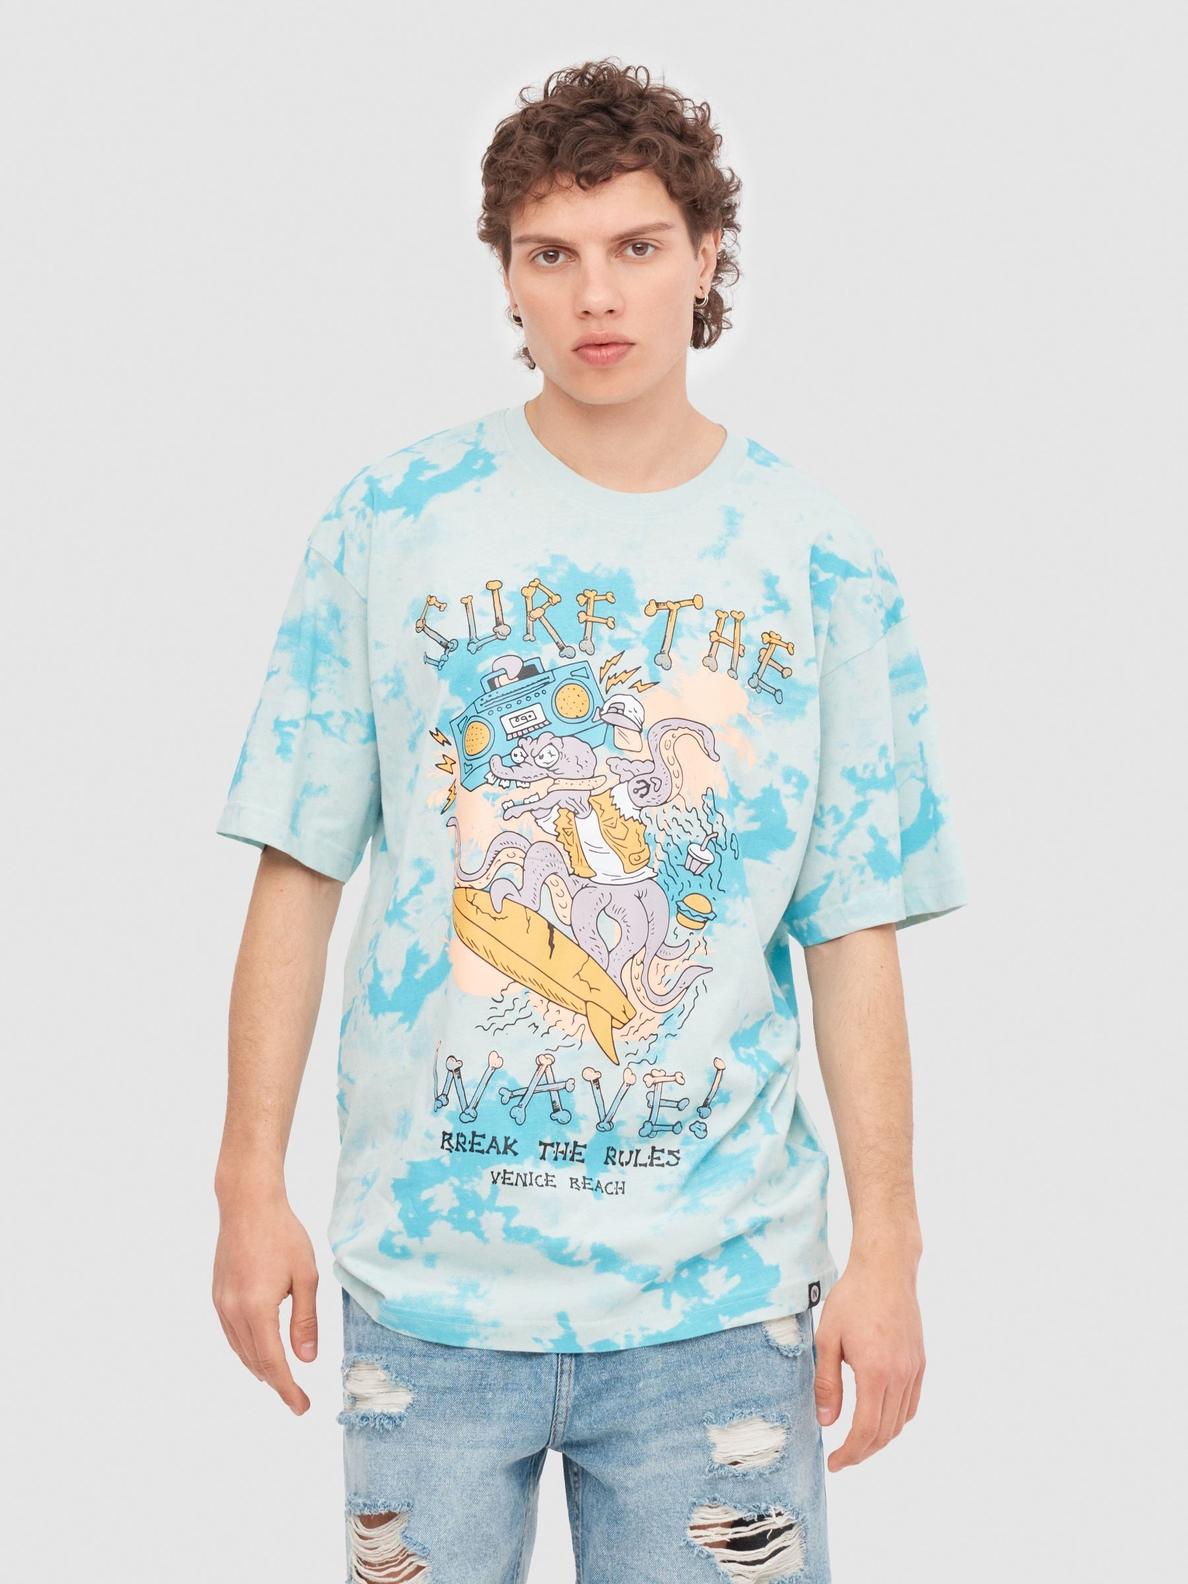 Oferta de Camiseta tie dye pulpo surfero por 4,99€ en Inside